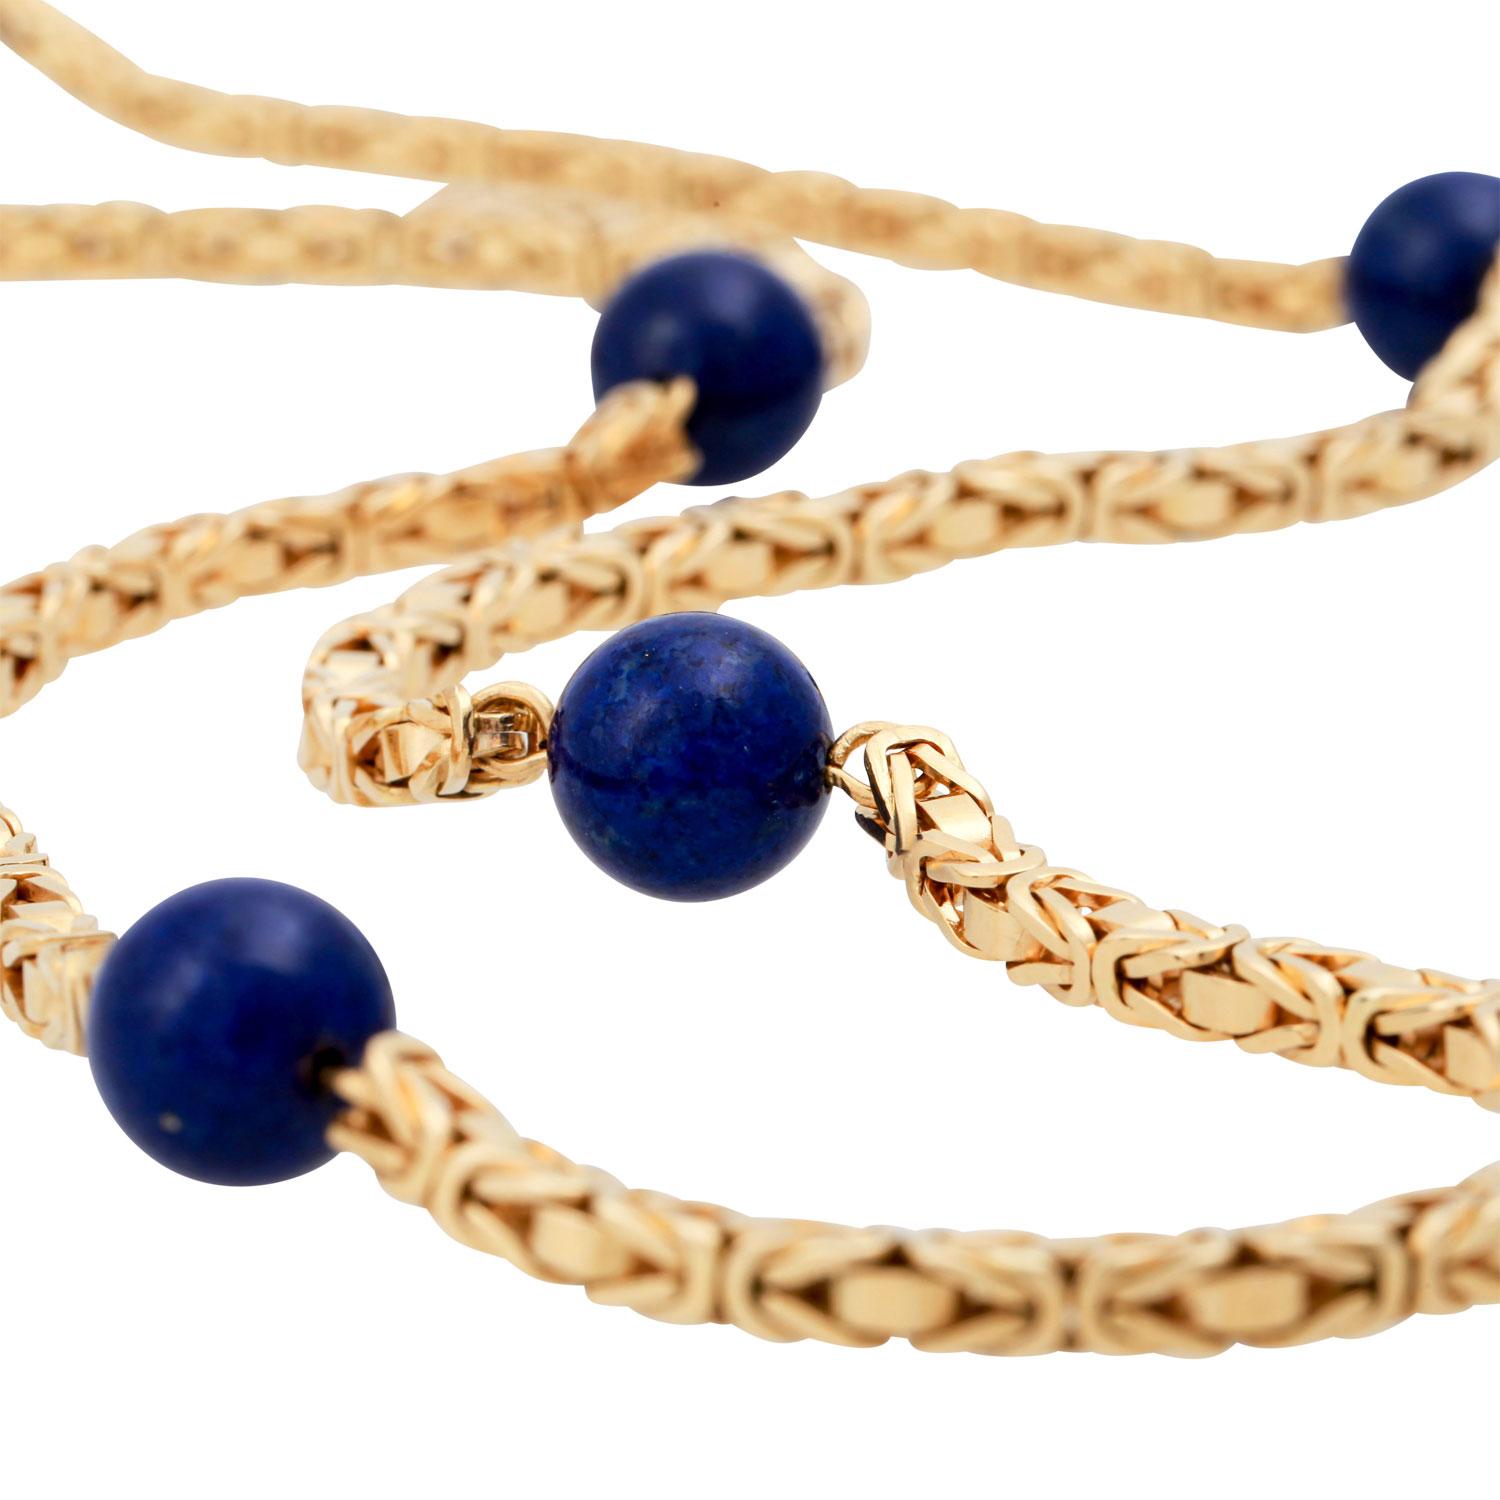 Women's Byzantine chain with 6 lapis lazuli beads. For Sale